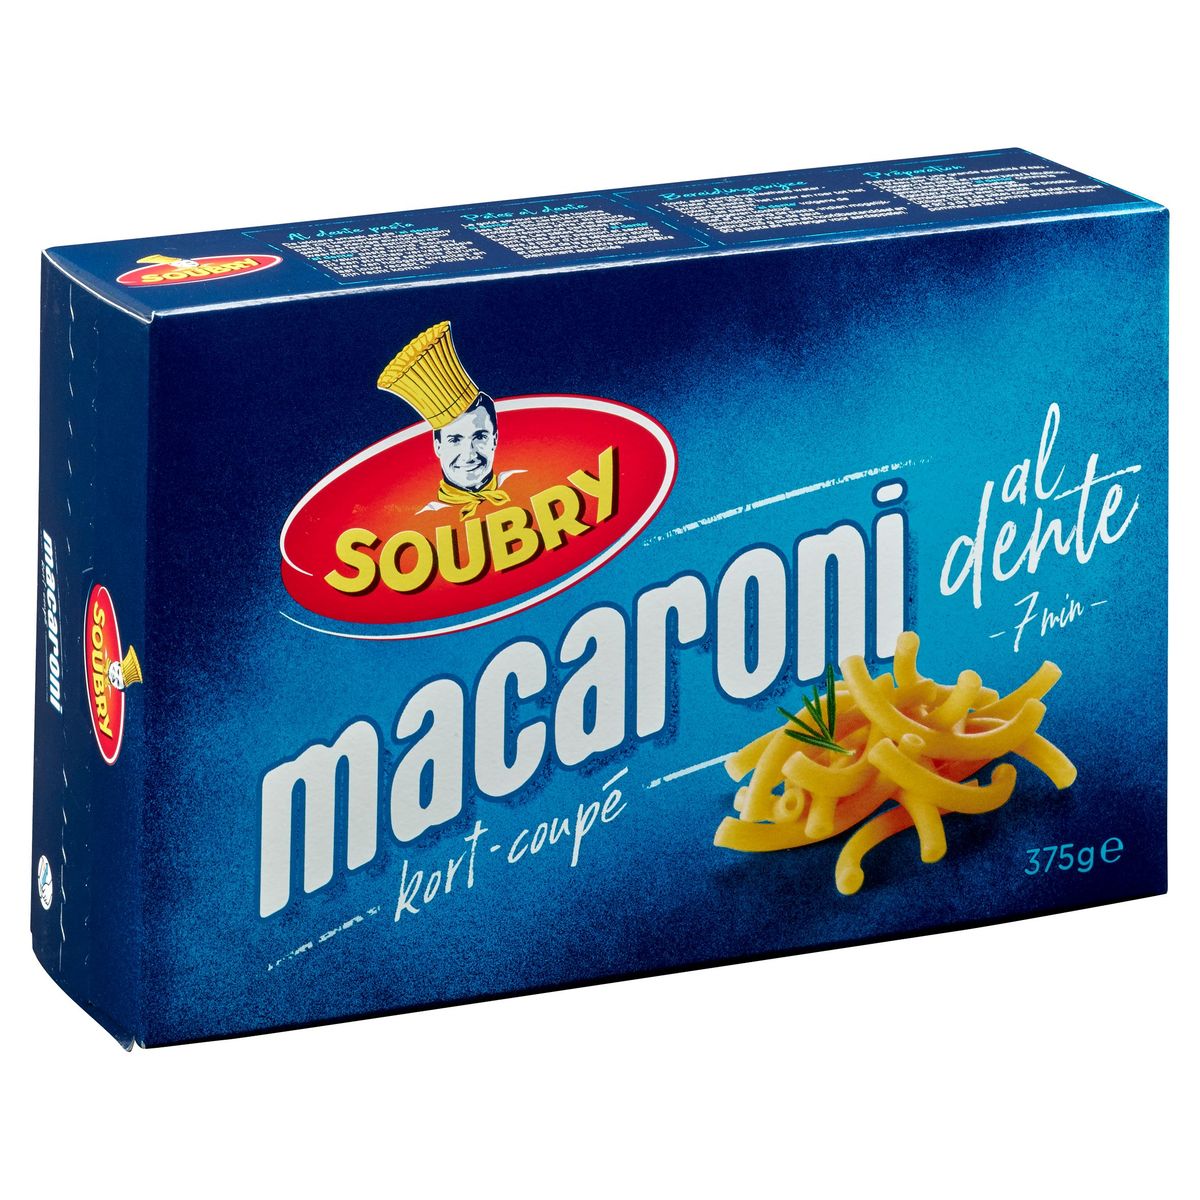 Soubry Pasta Macaroni kort 375g